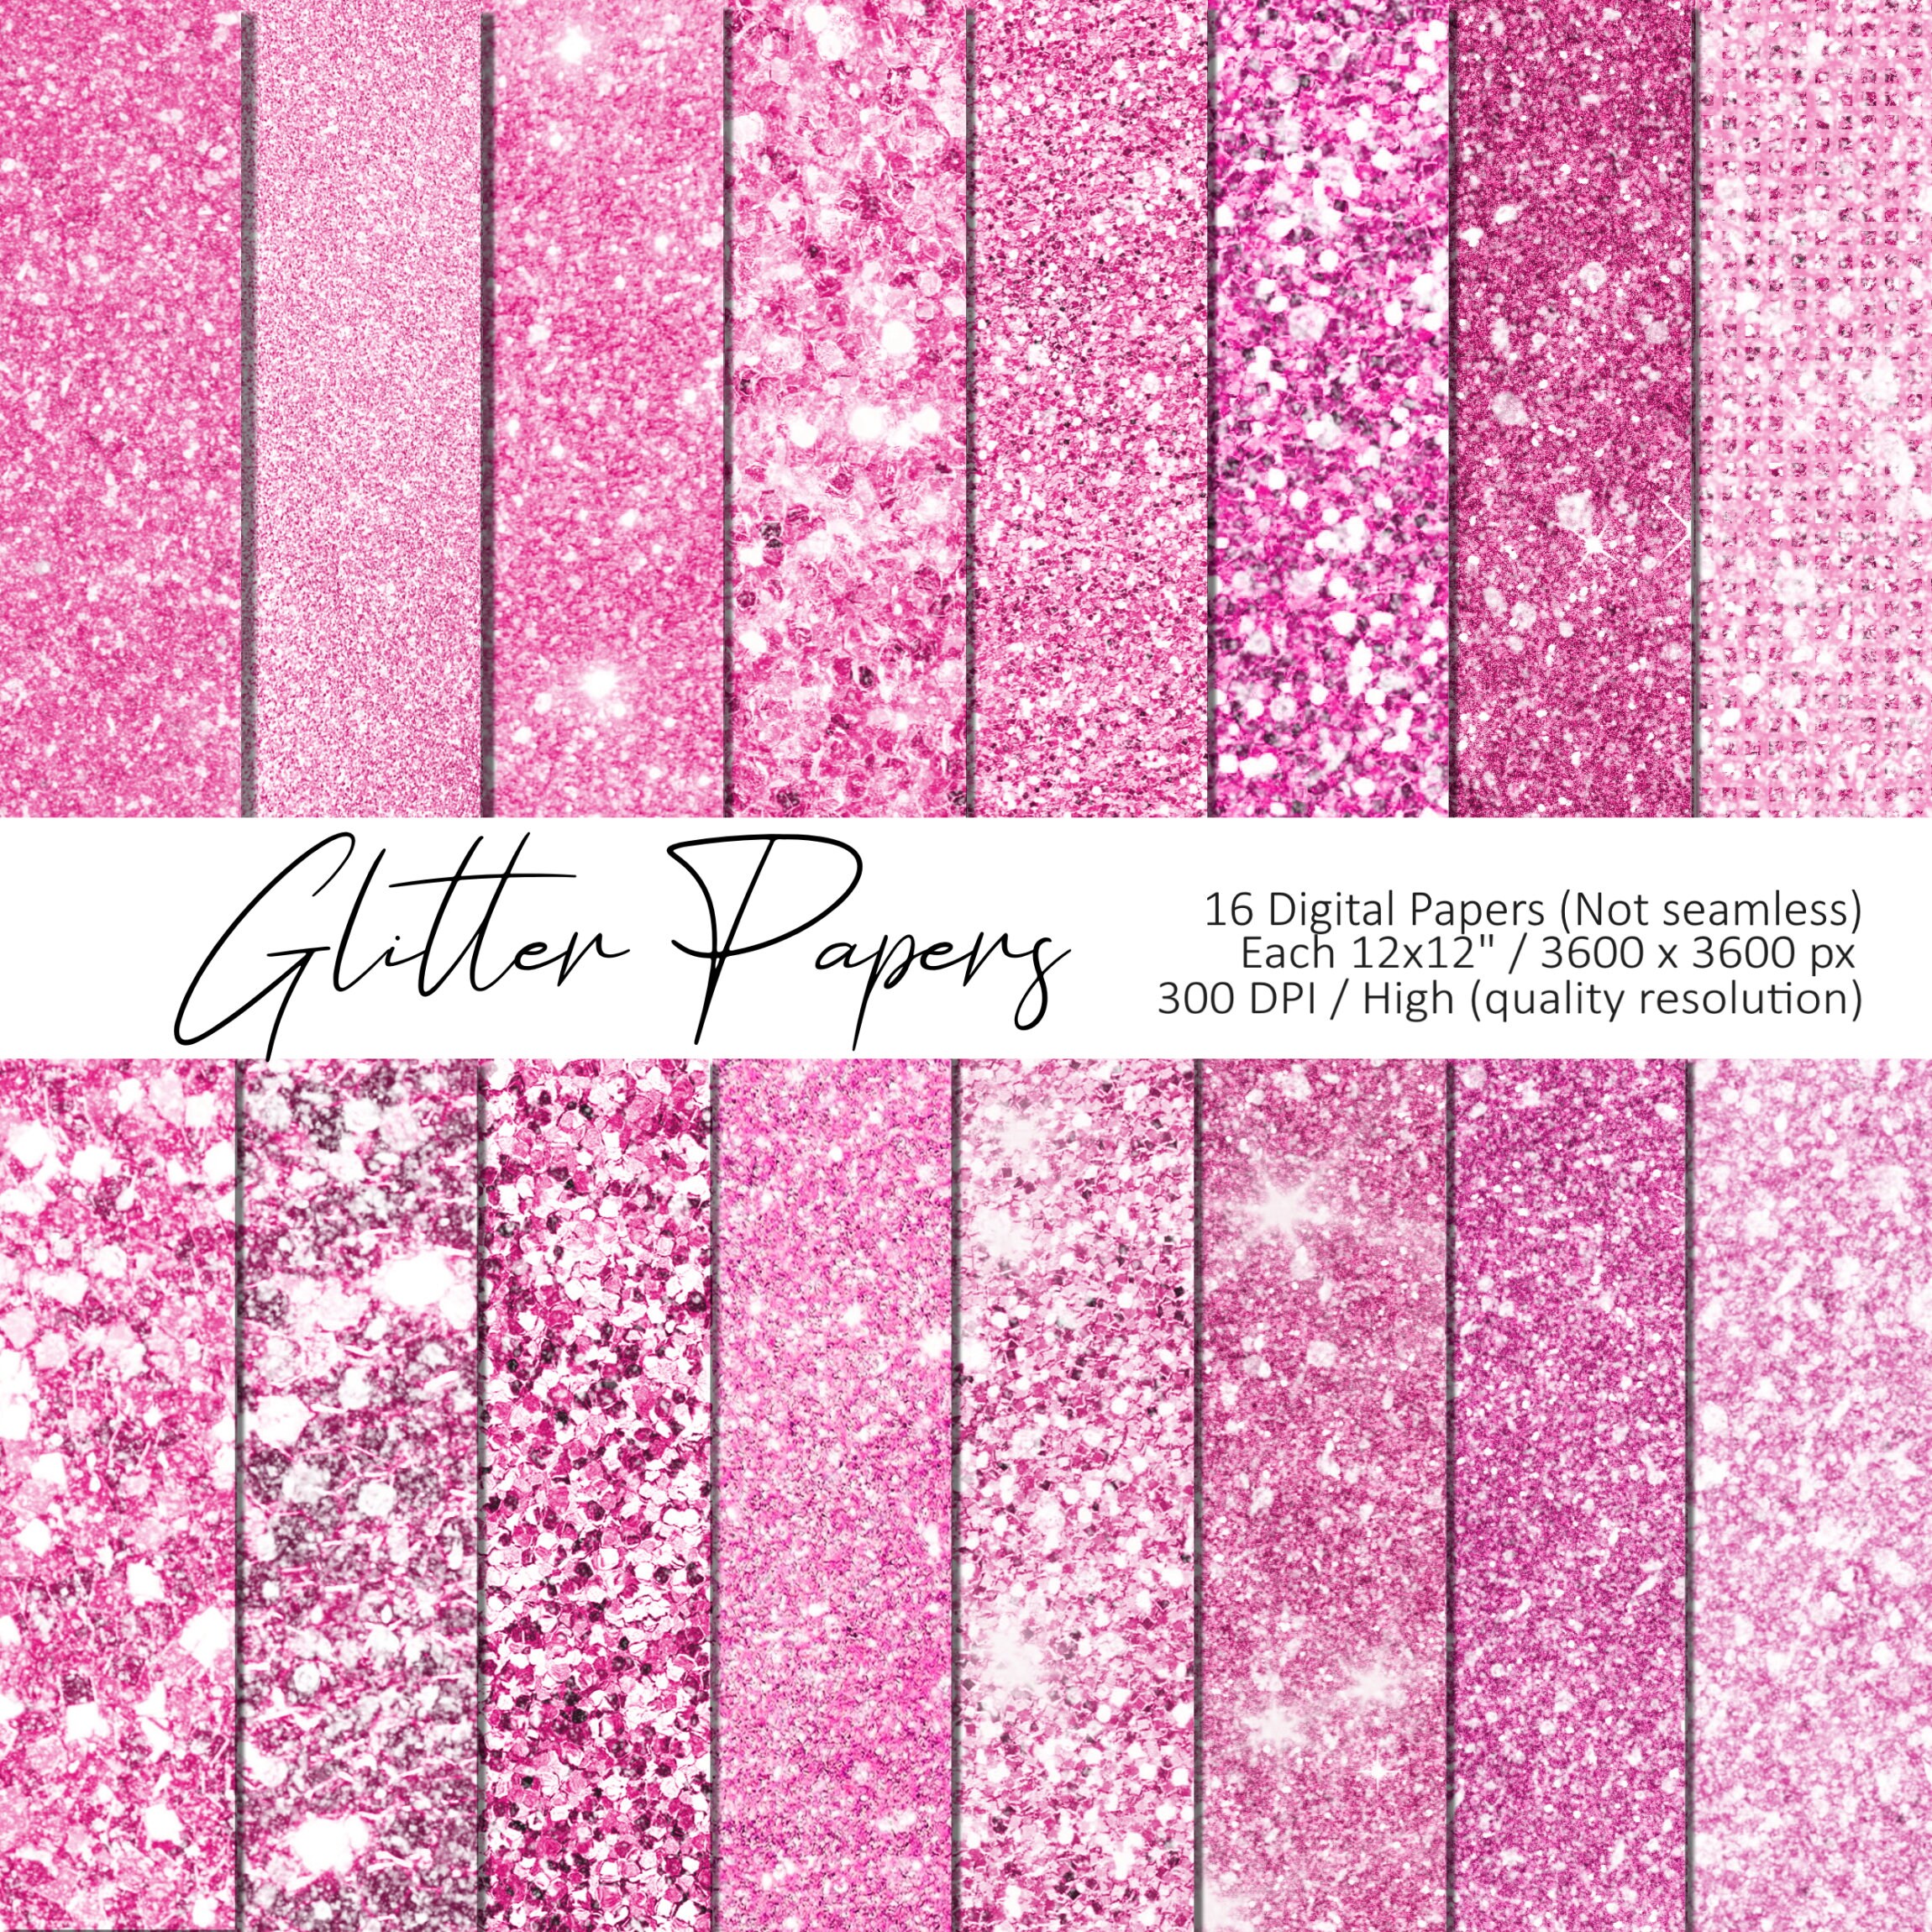 Pink Glitter Digital Paper